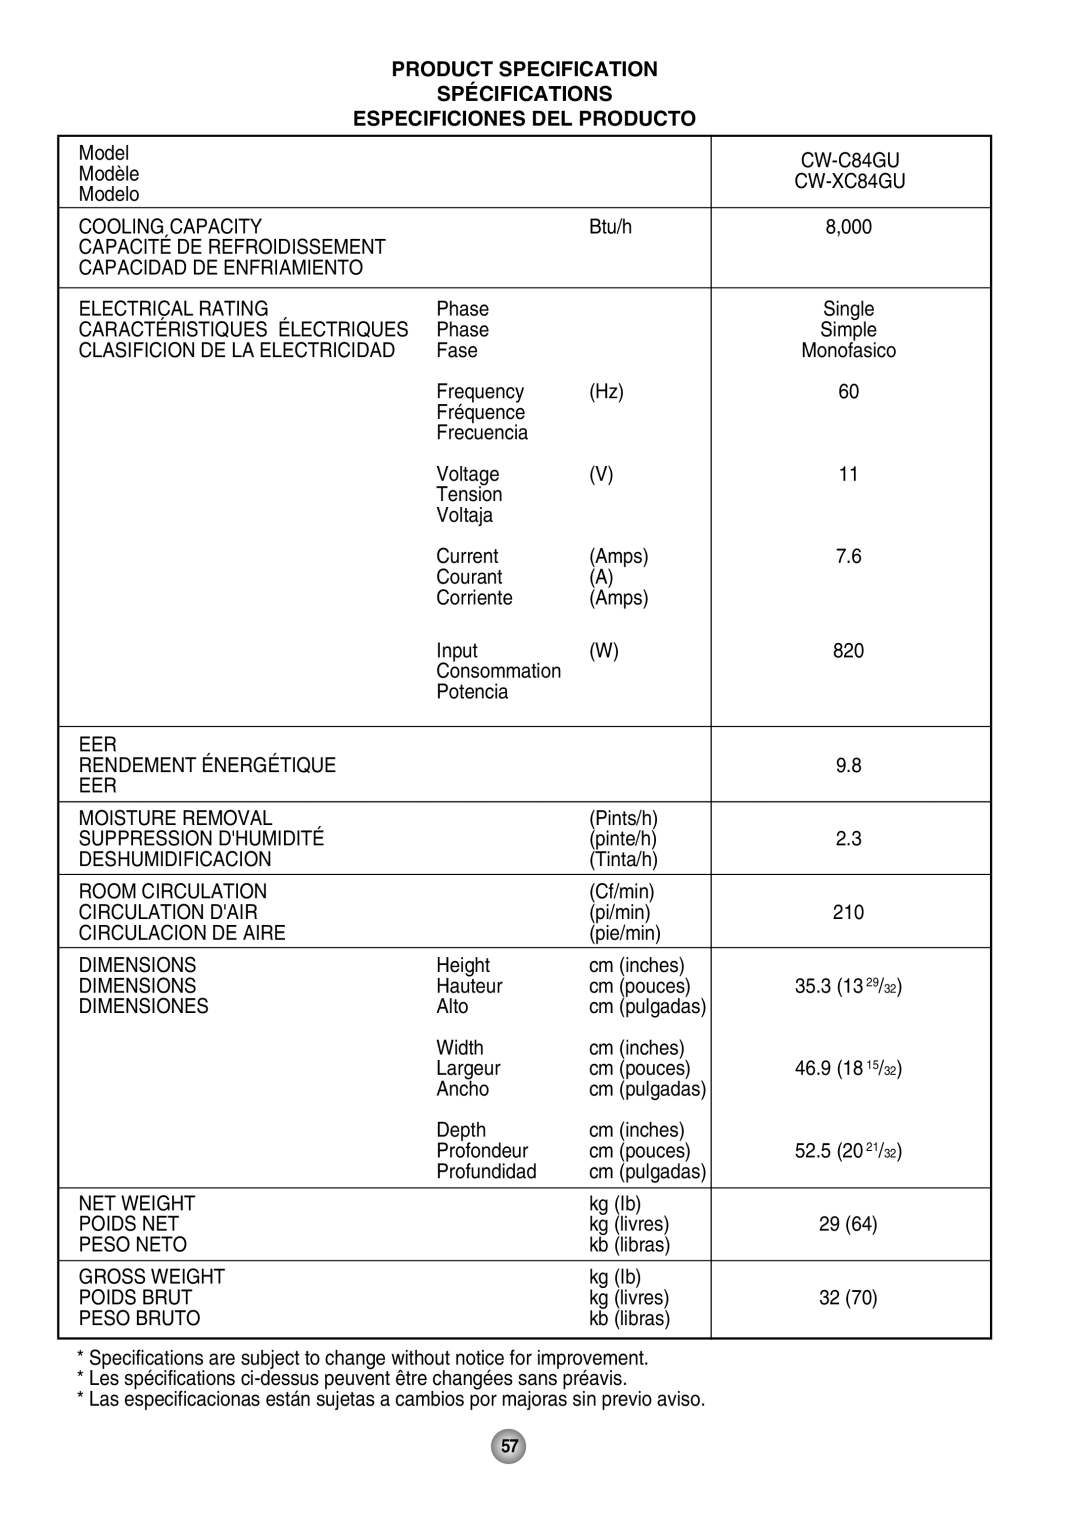 Panasonic CW-XC64HU manual Product Specification Spécifications, Especificiones Del Producto, Model 